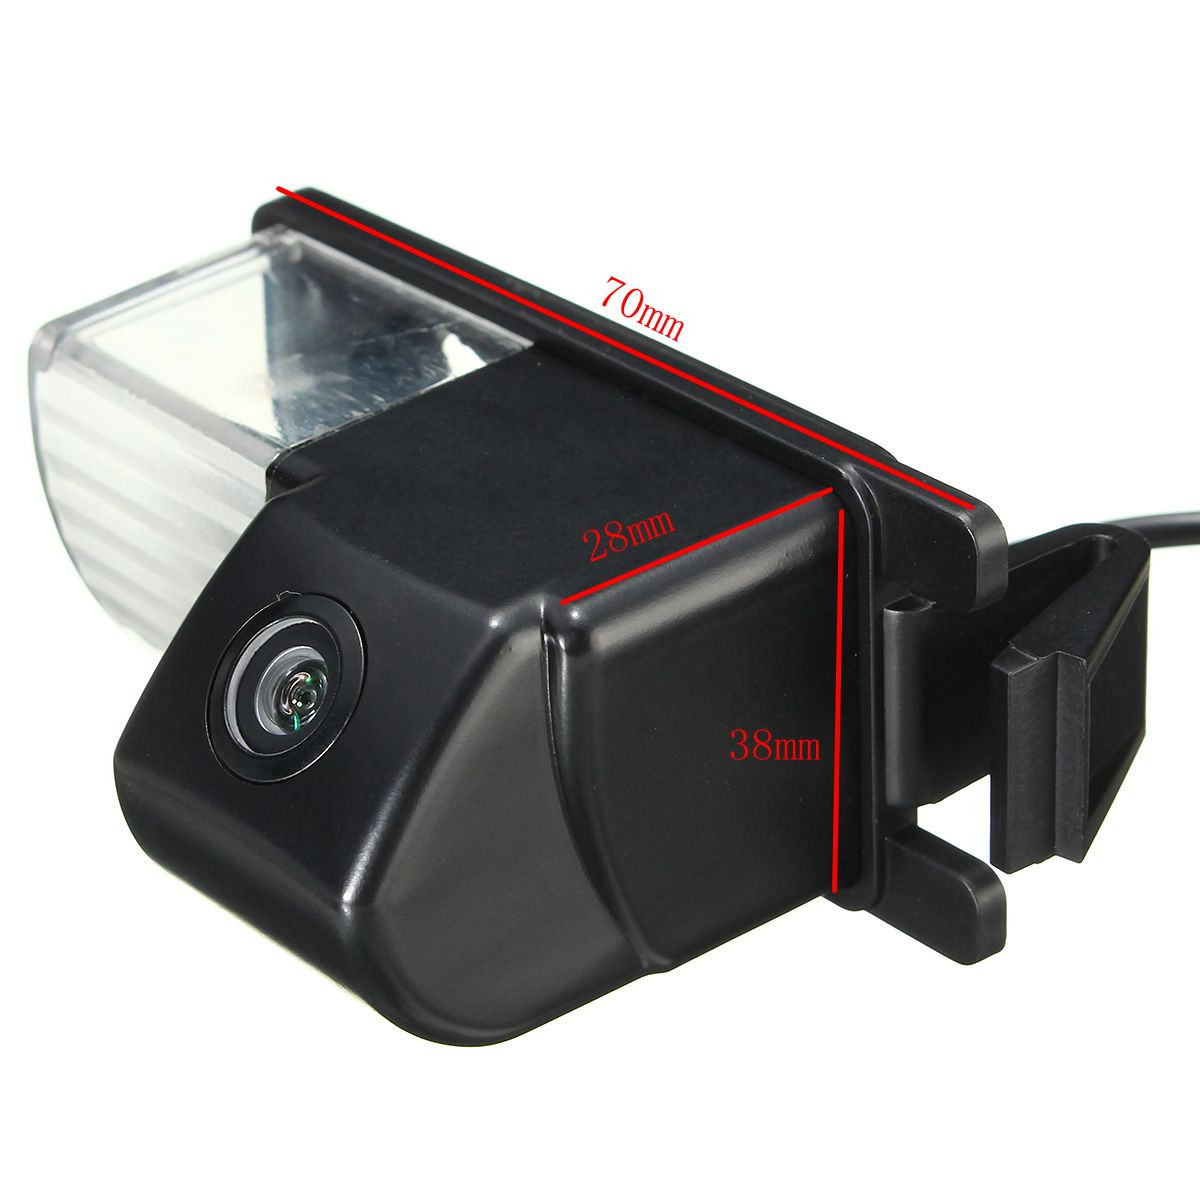 CCD-Rear-View-Camera-For-NISSAN-Versa-Pulsar-Cube-350Z-370Z-GTR-Infiniti-G35-G37-1113669